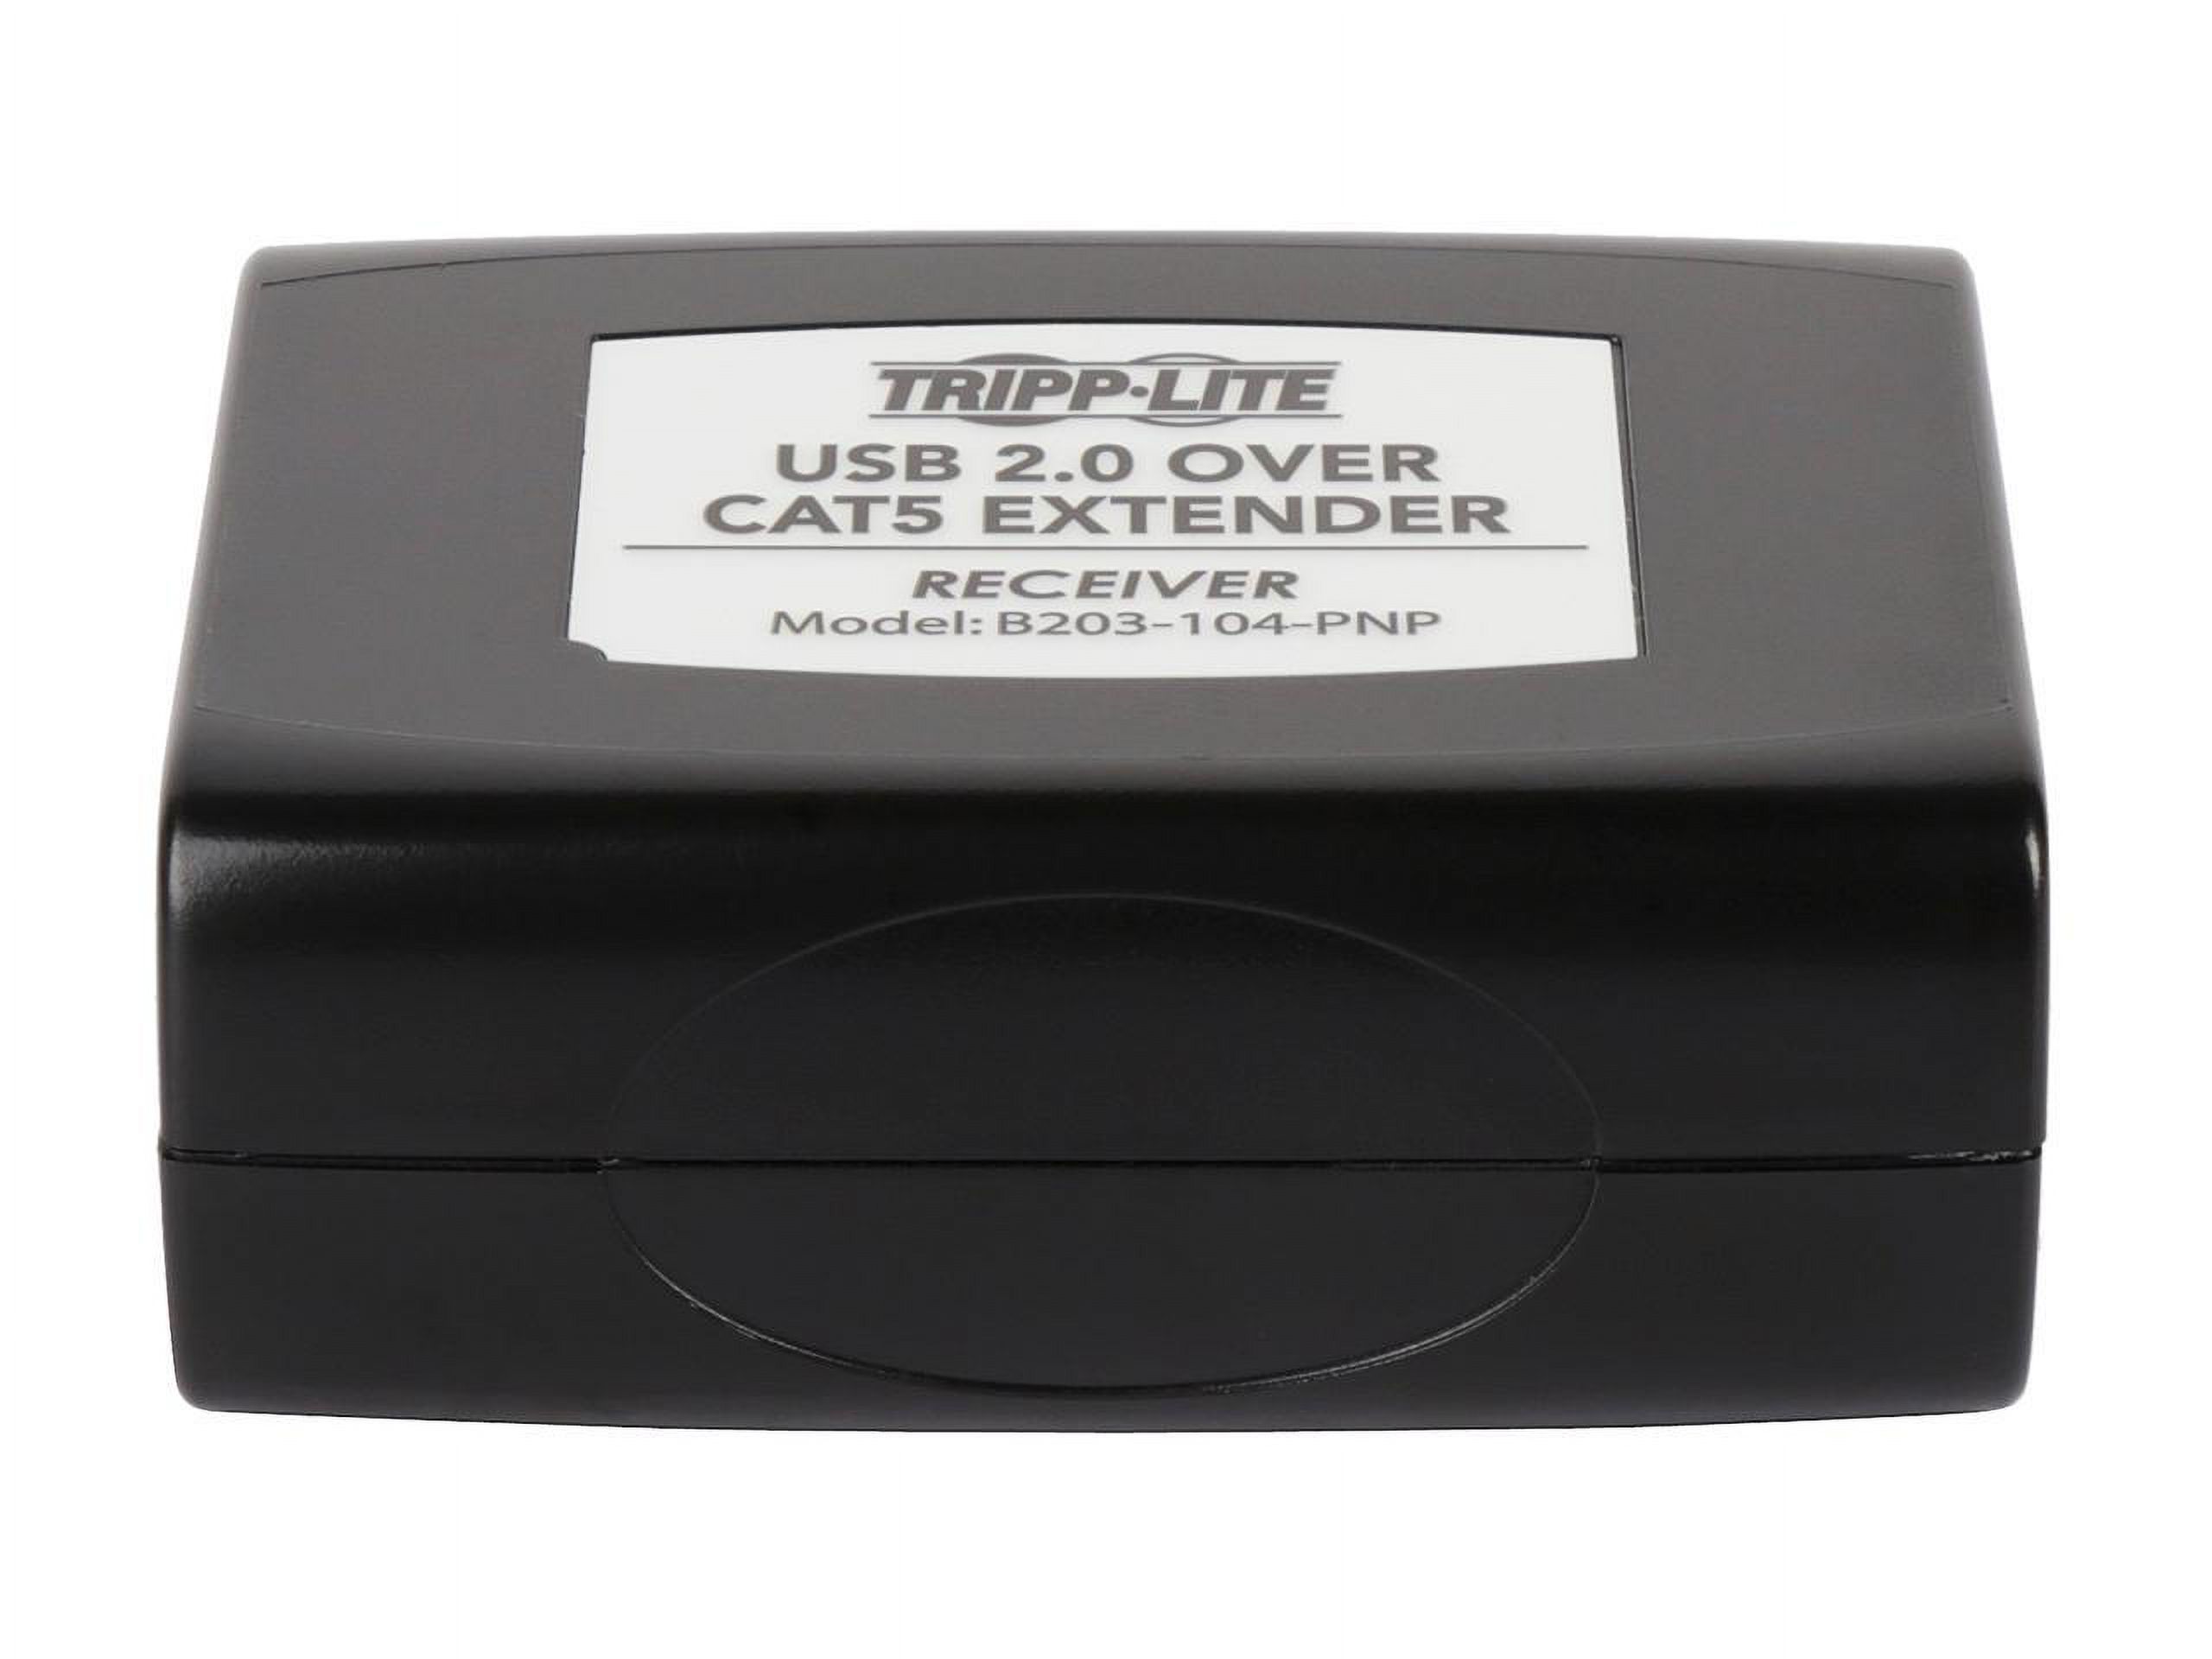 Tripp Lite 4-Port USB 2.0 over Cat5/Cat6 Extender Hub Kit, Transmitter & Receiver, Hi-Speed USB-A Up to 164 ft. (B203-104-PNP) - image 5 of 5